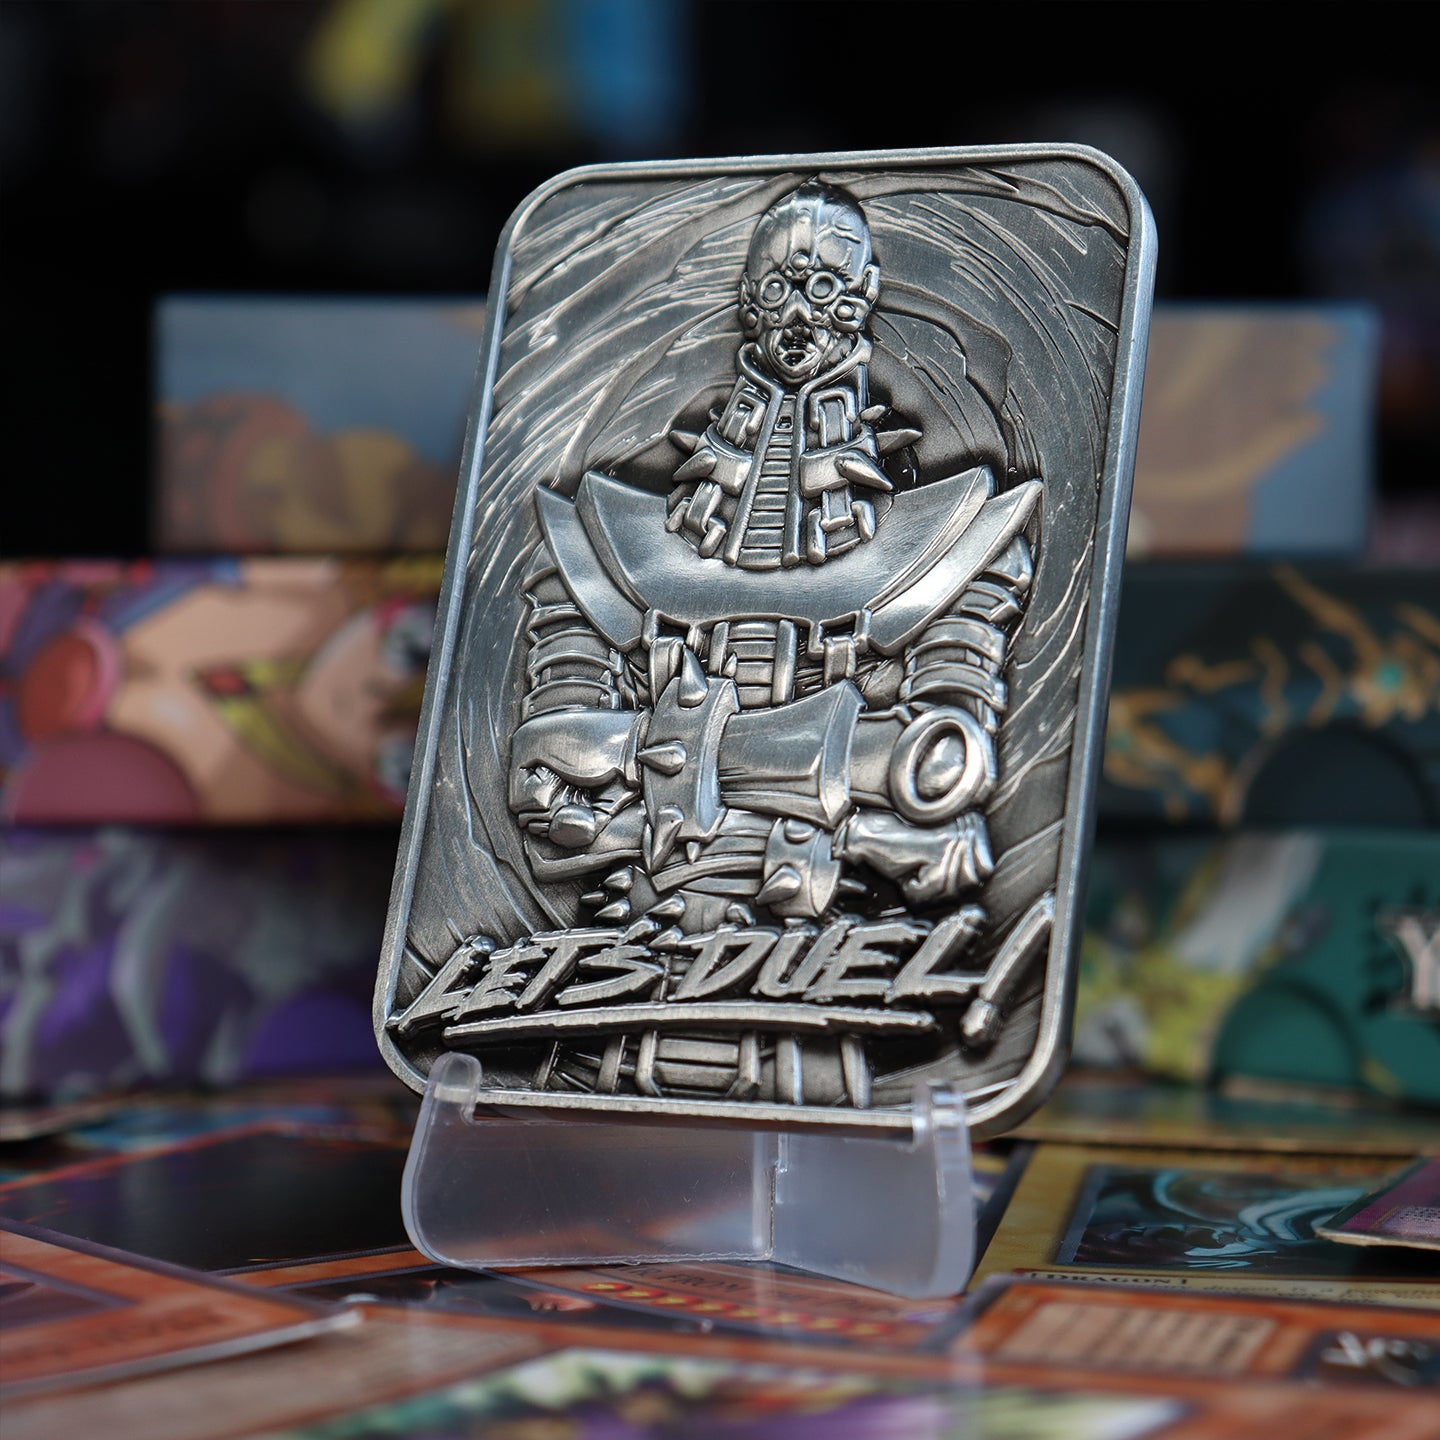 Yu-Gi-Oh! limited edition jinzo metal card from Fanattik